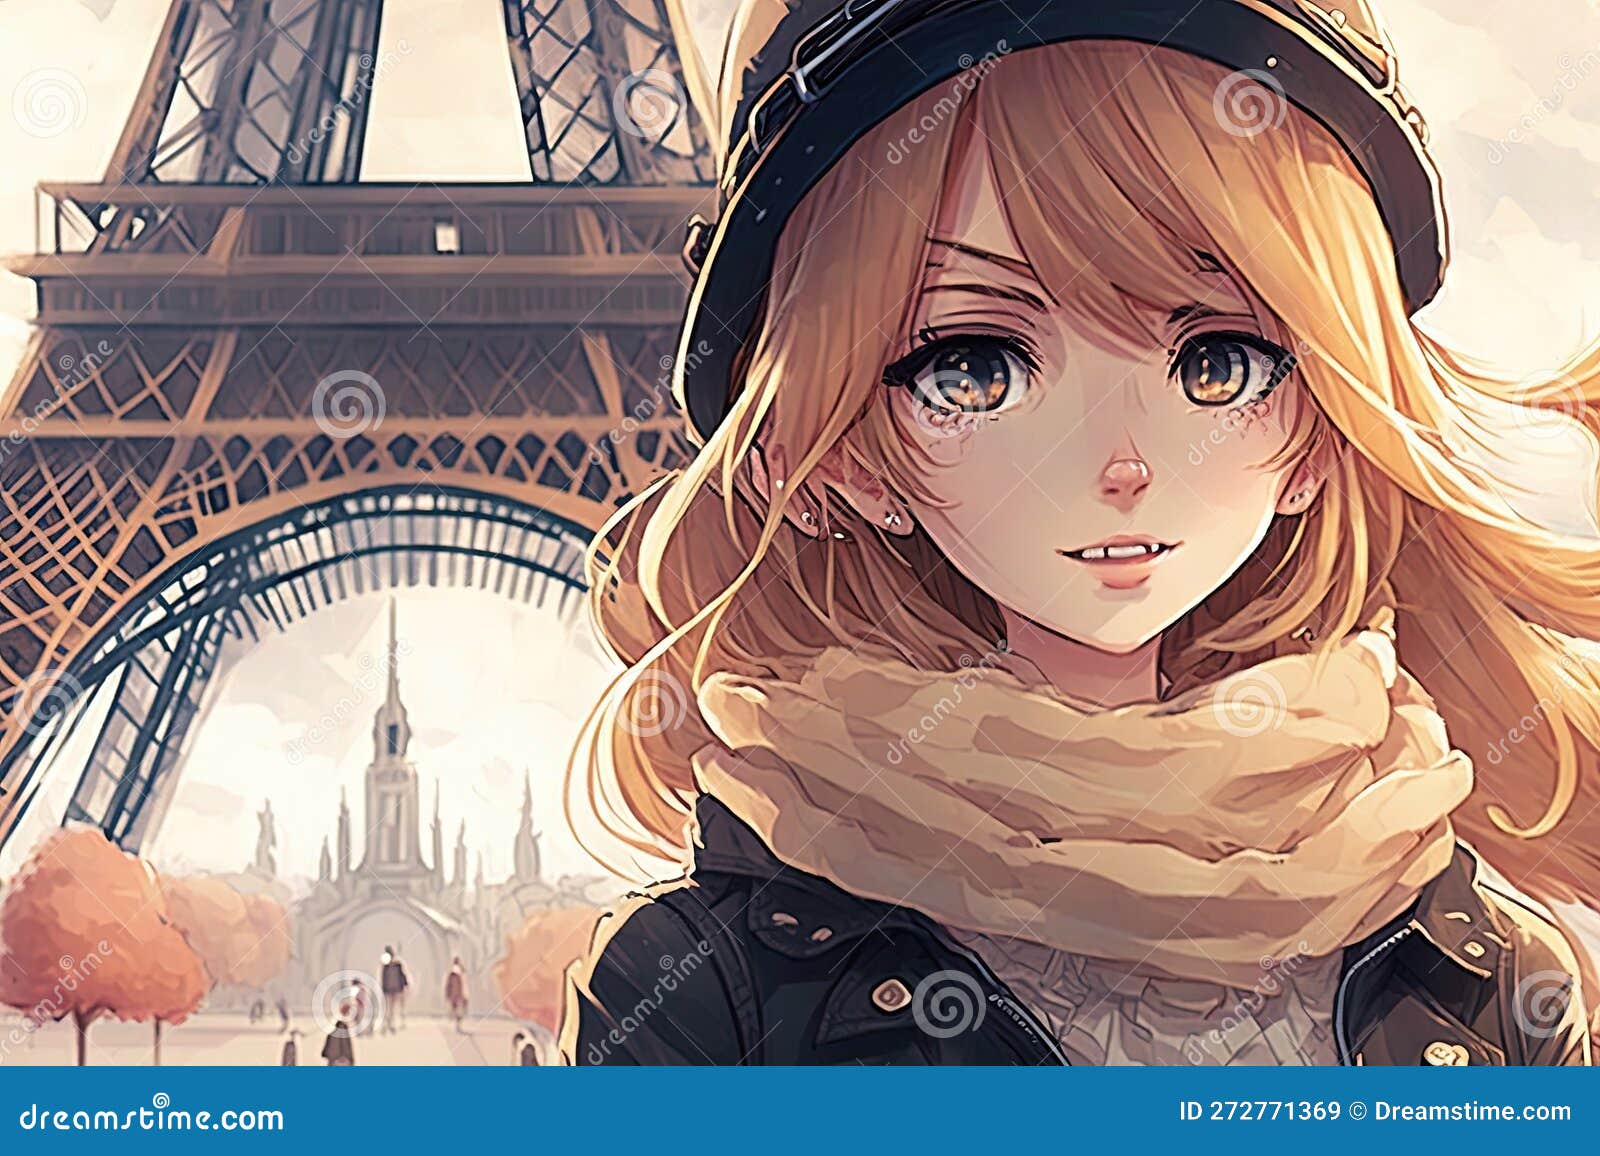 Sakura in Paris on Steam